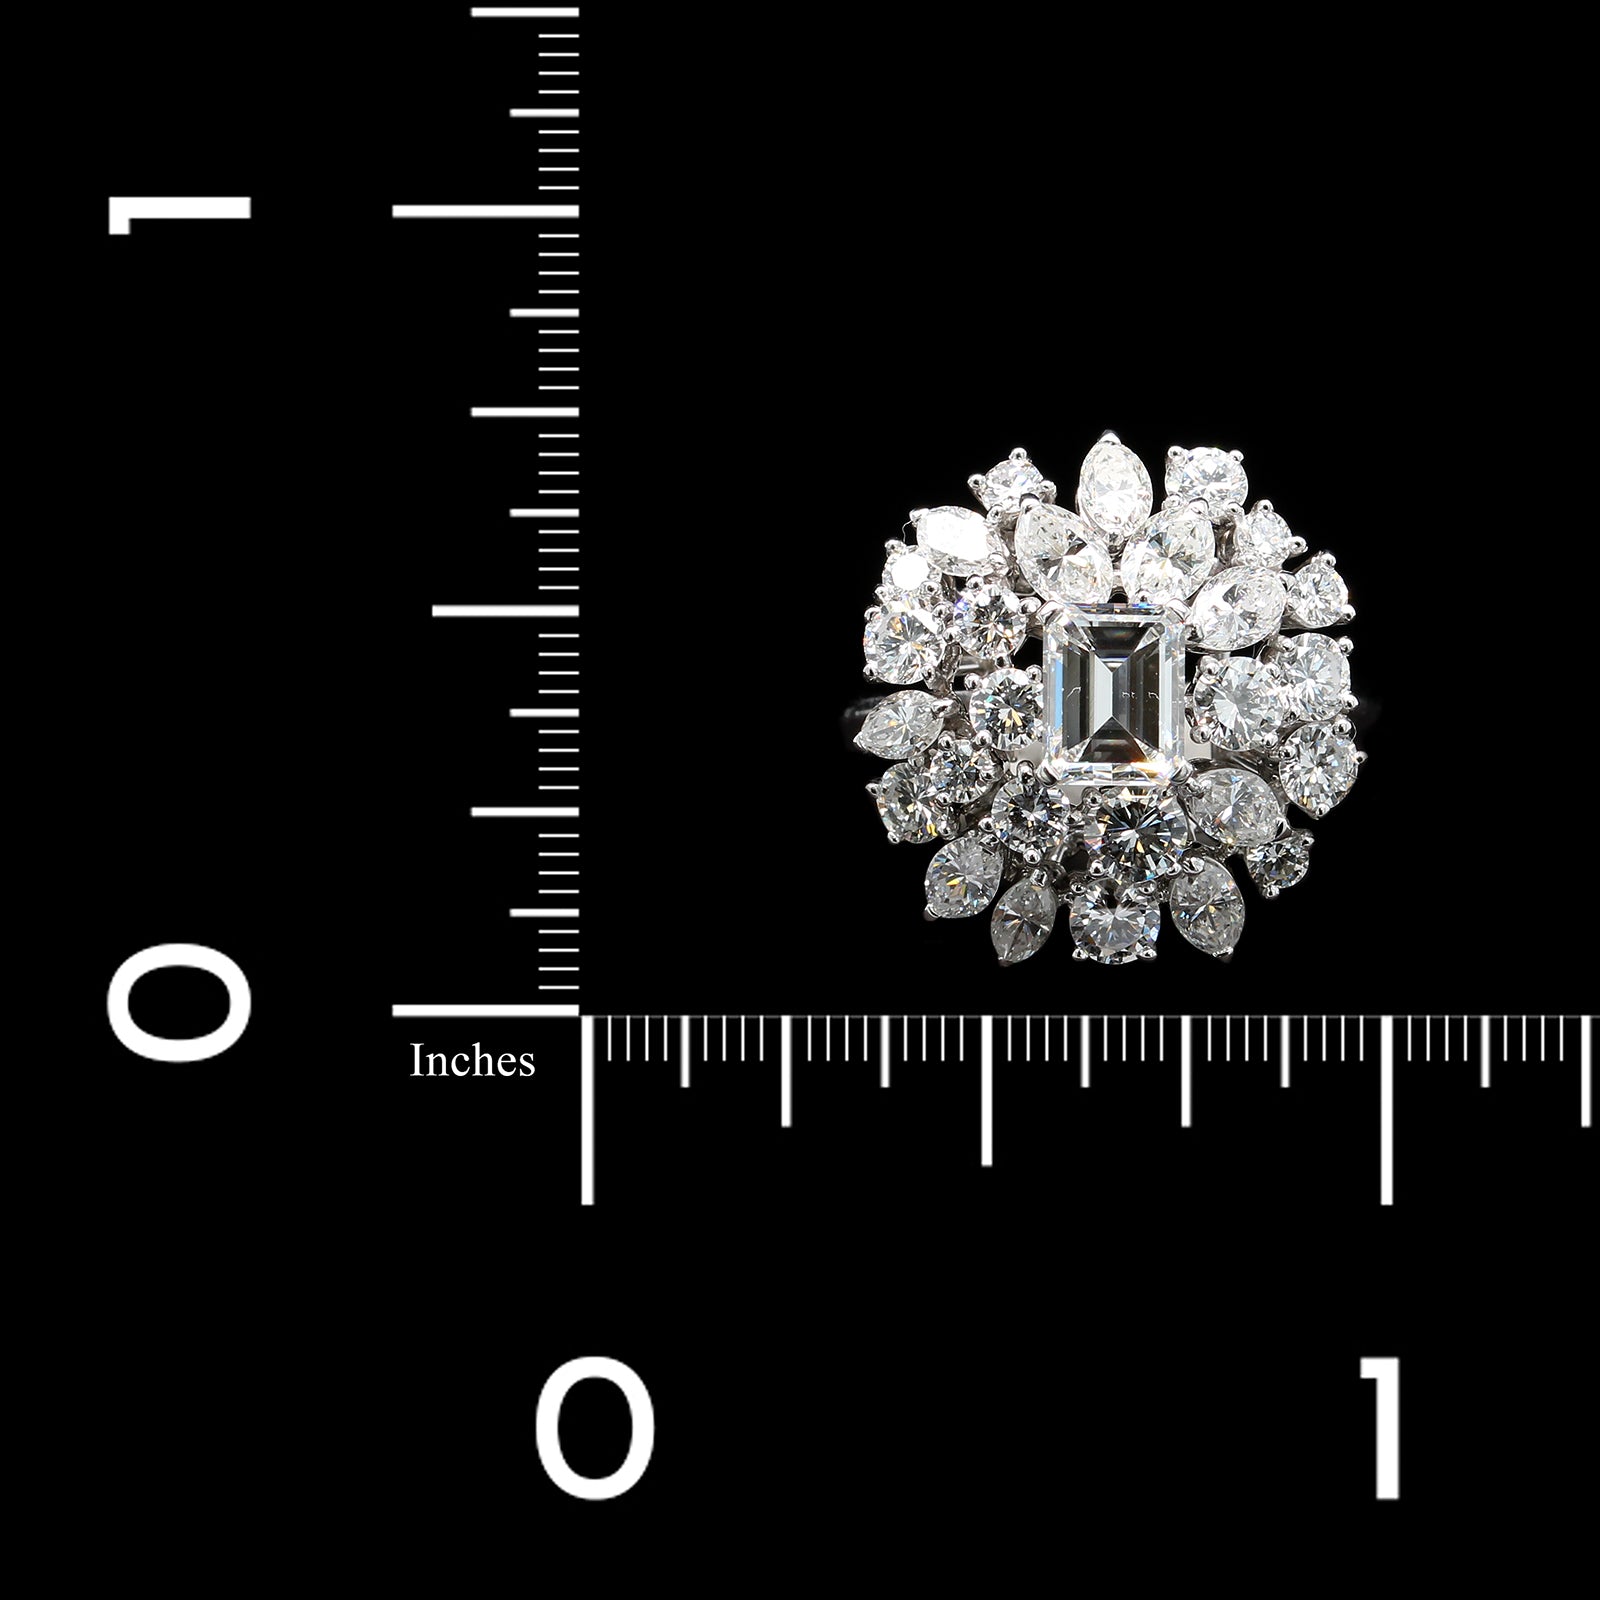 18K White Gold Estate Diamond Ring